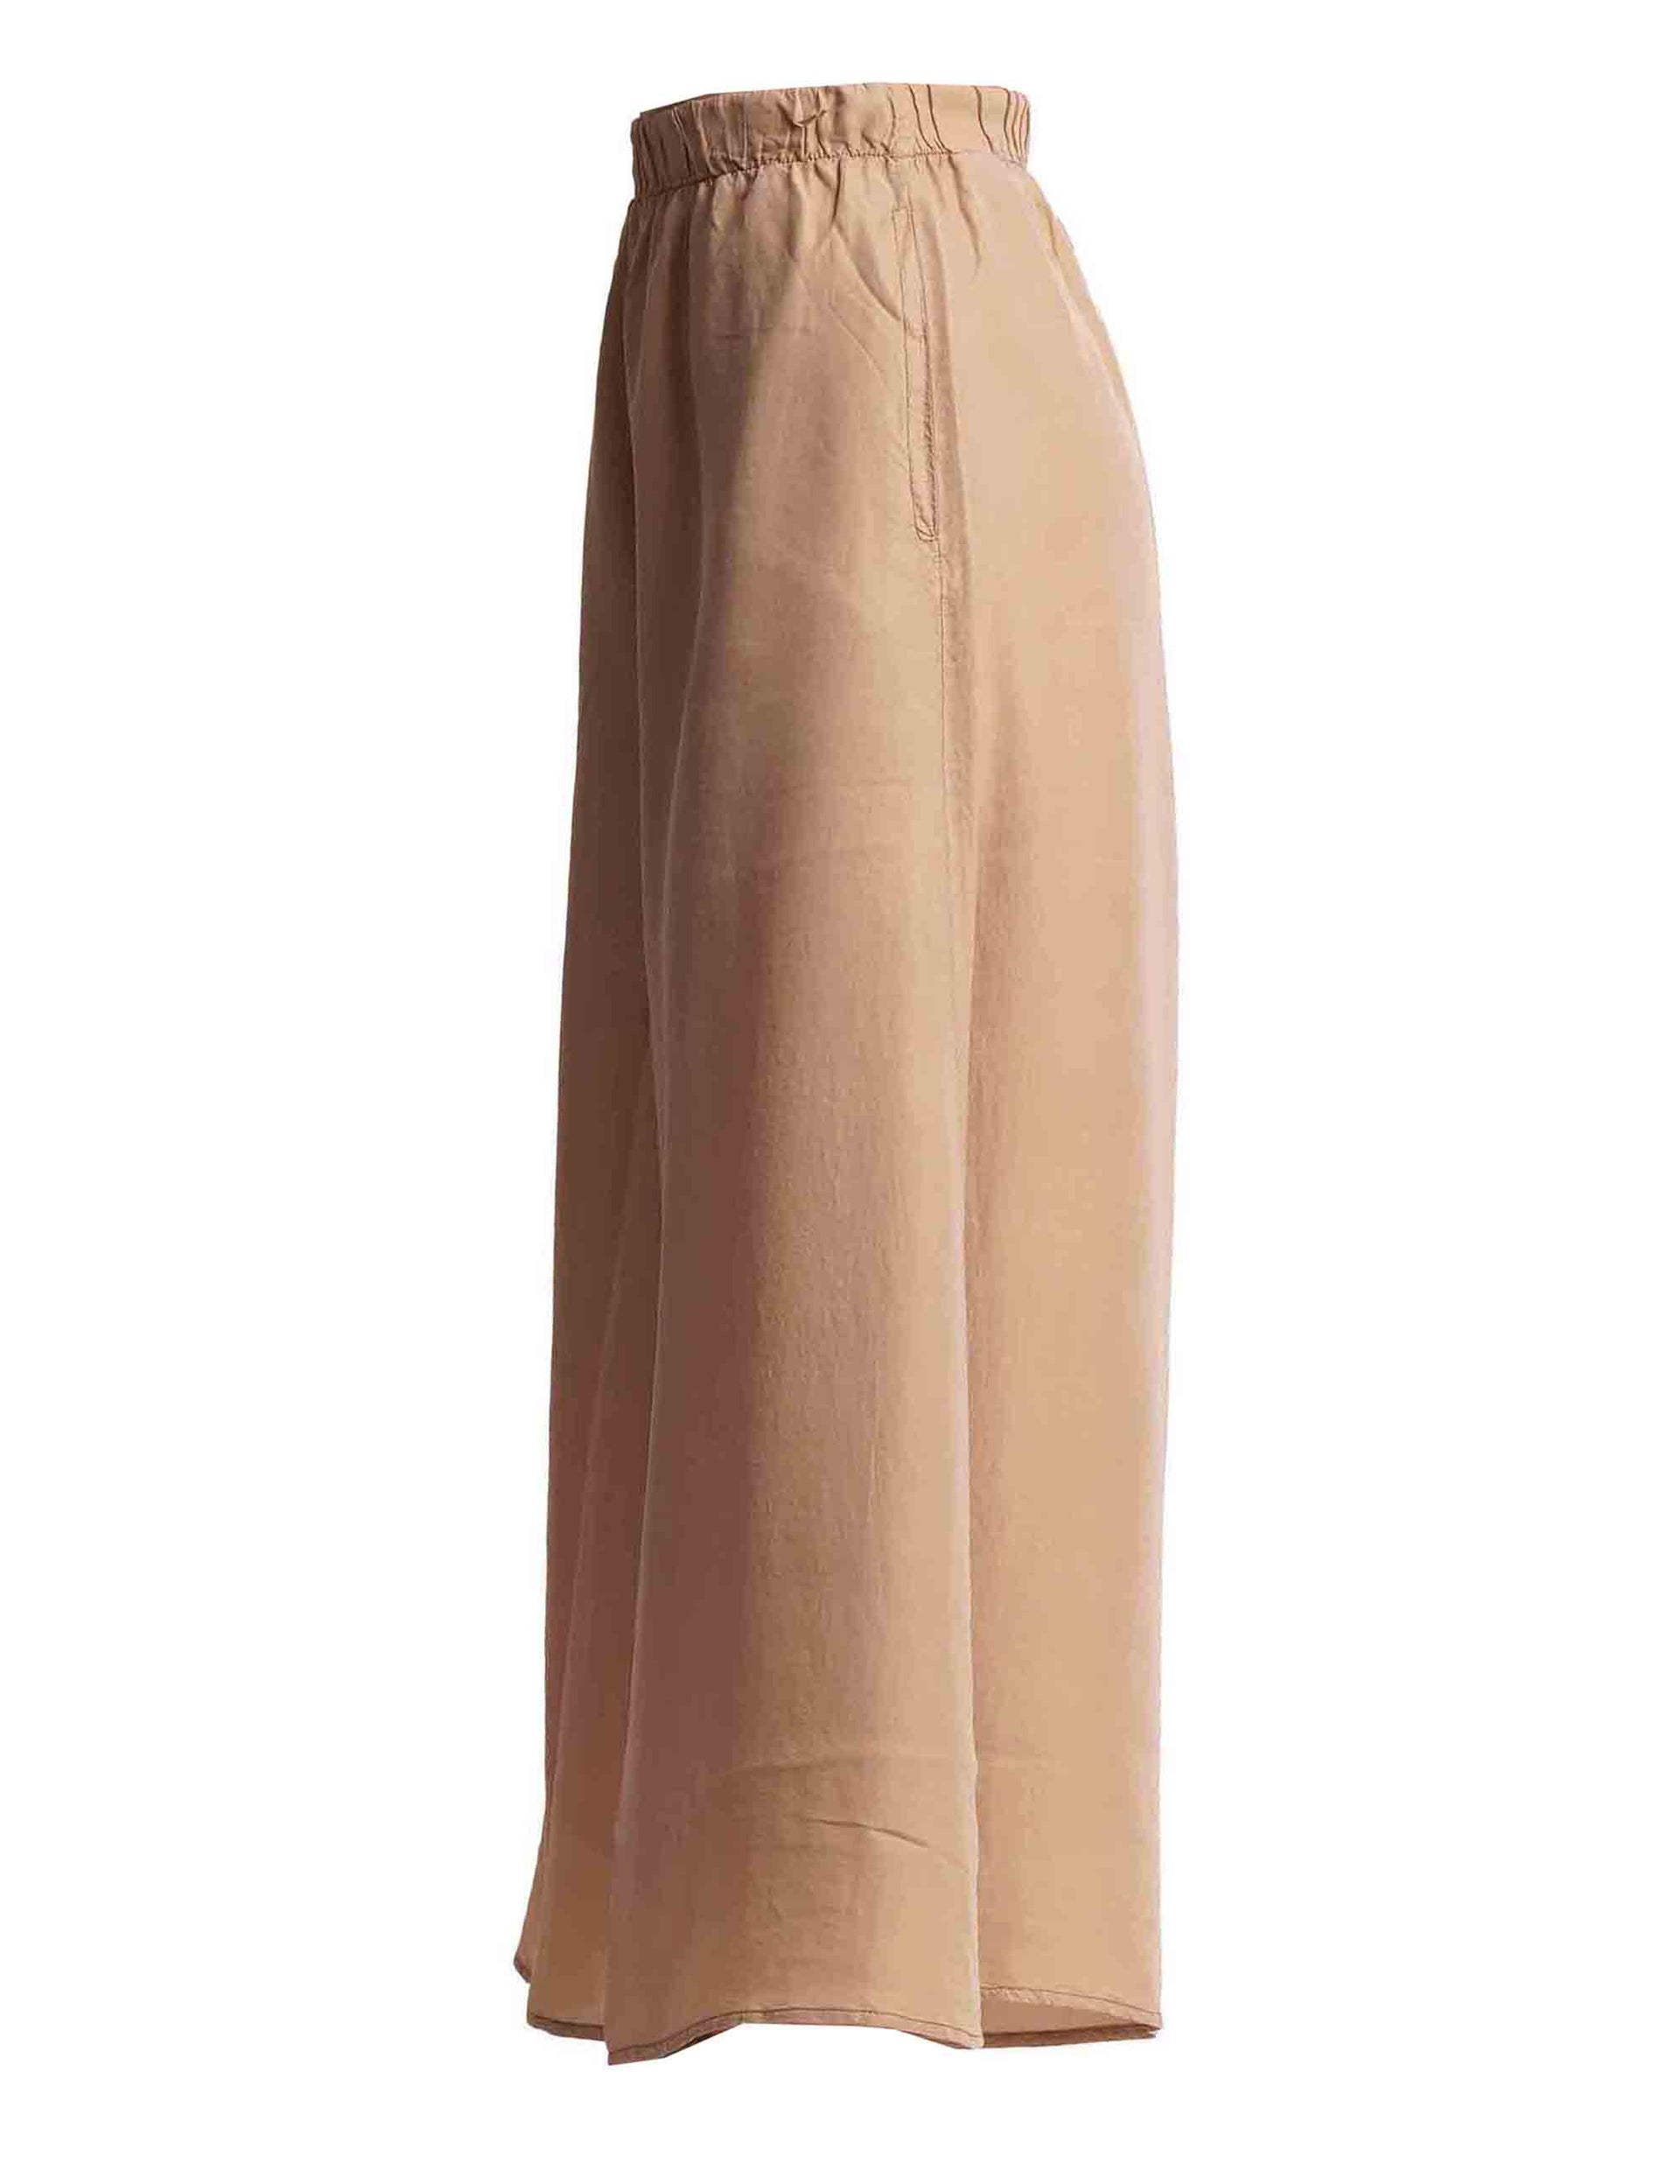 Pantaloni donna in pura seta cammello a gamba larga